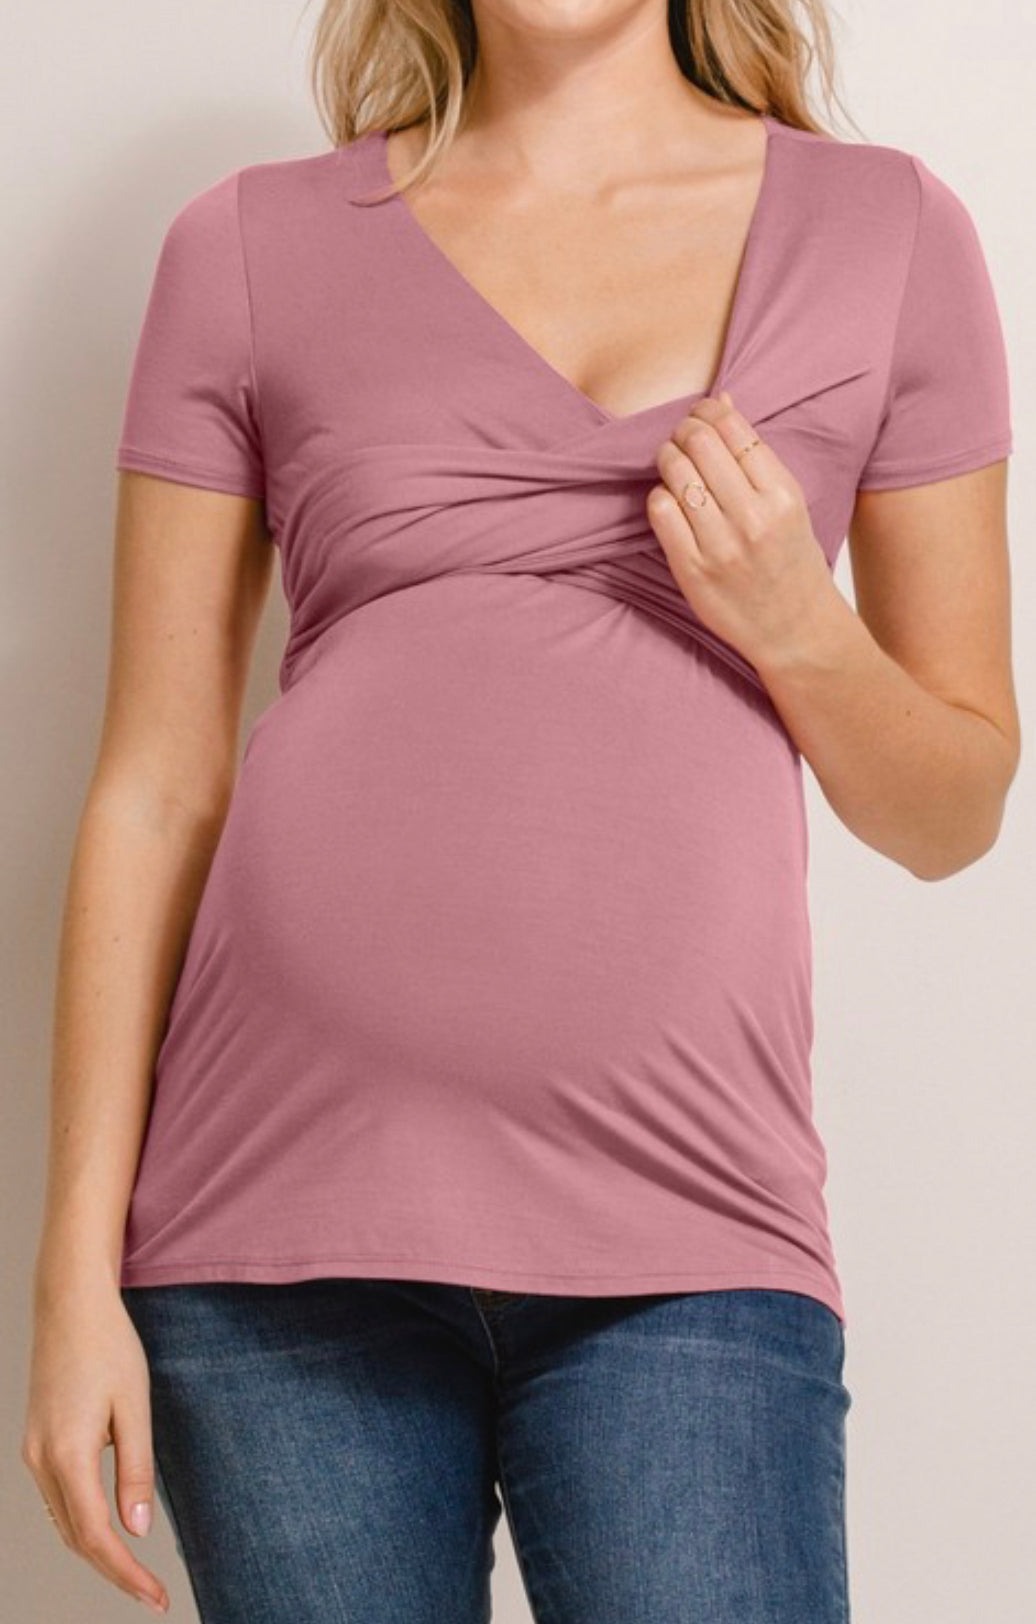 Breast Feeding Maternity Top in Mauve